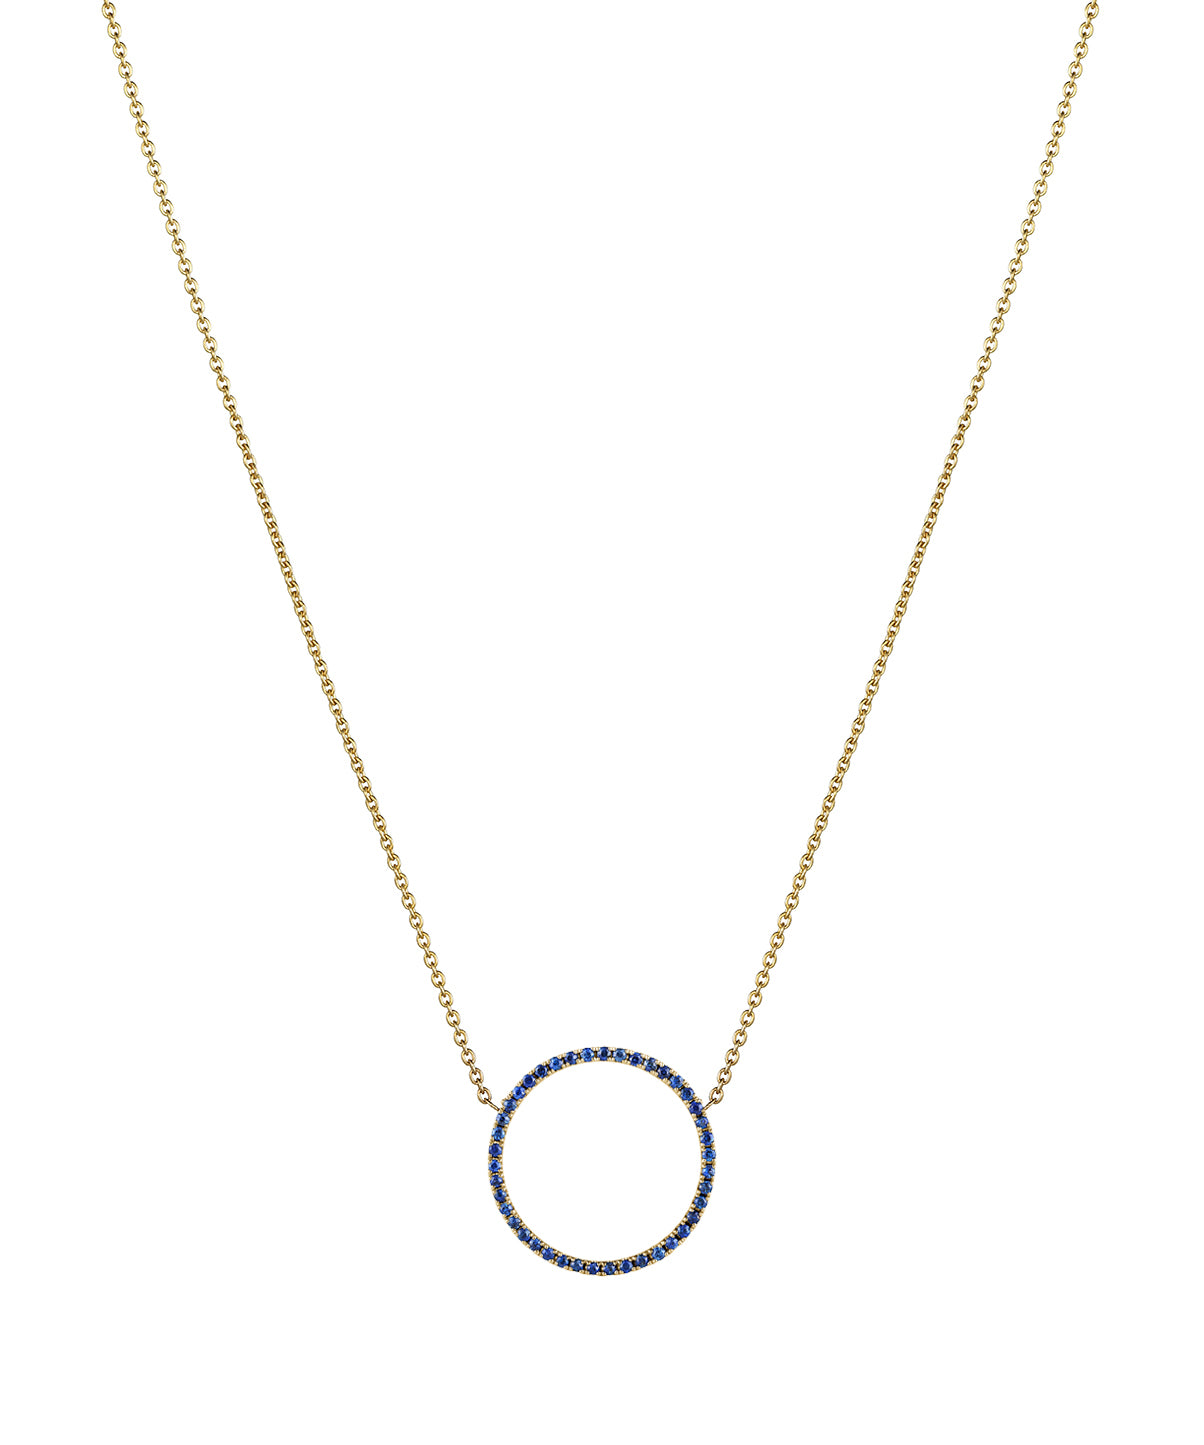 16mm blue sapphire circle pendant 18ct yellow gold